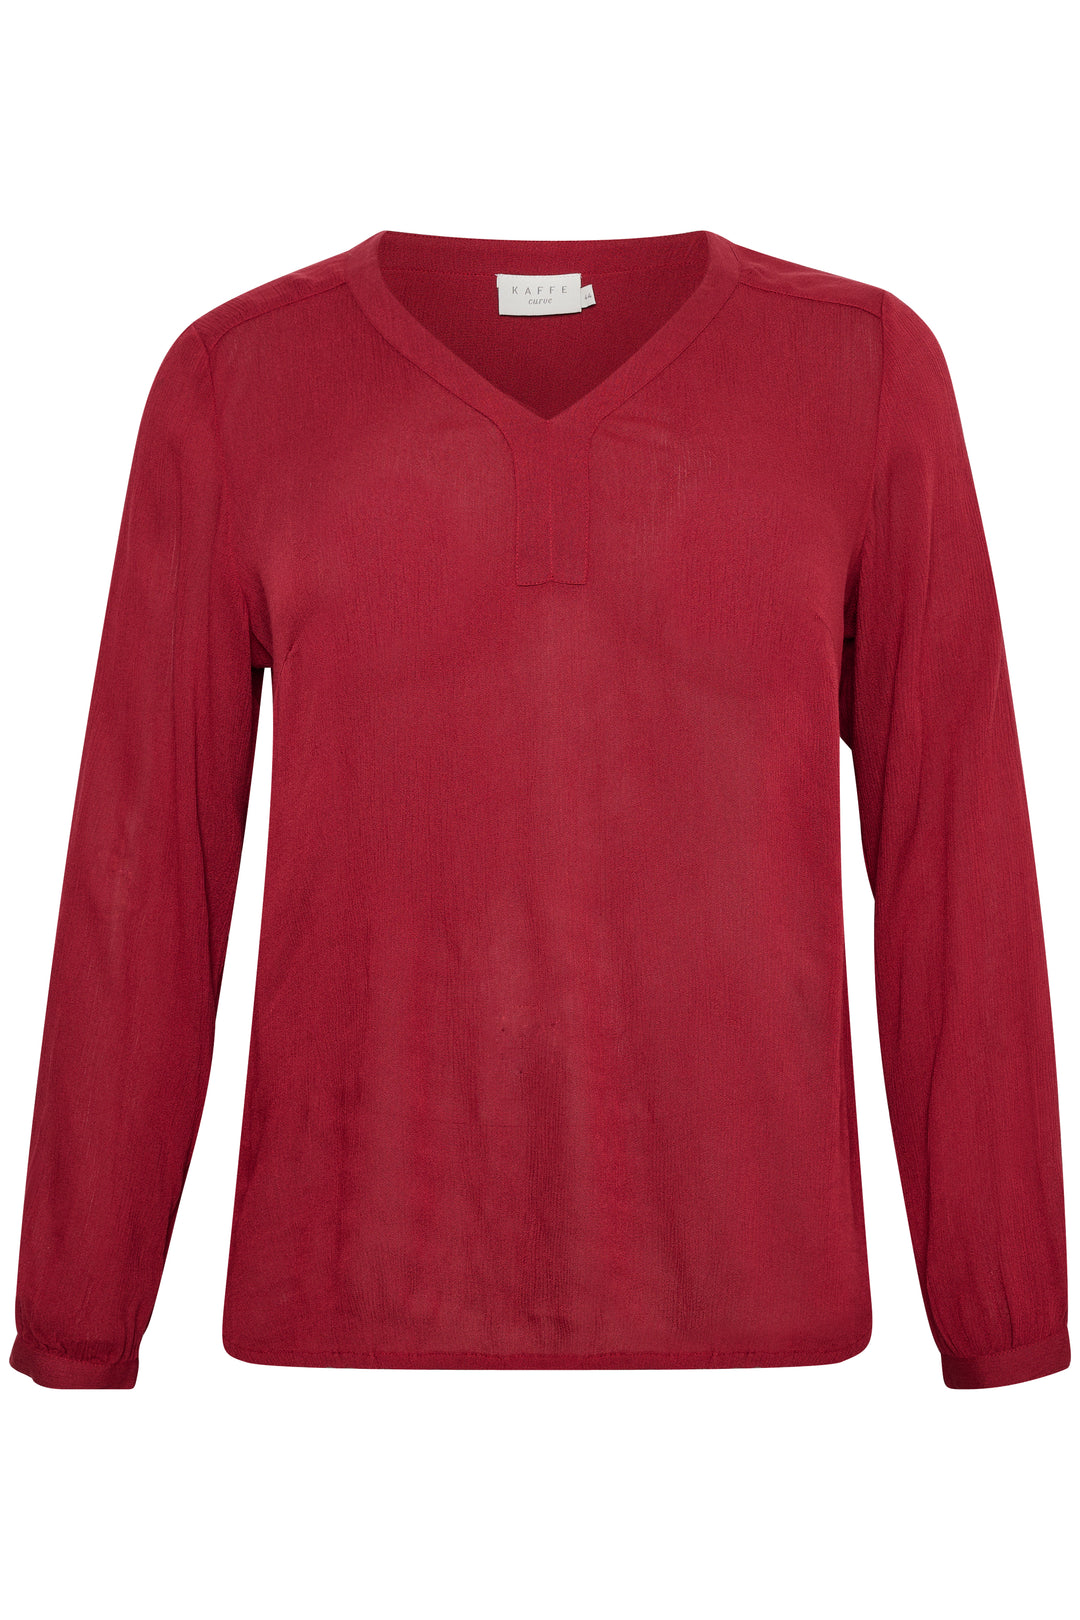 tijdloze rode blouse van ecovero viscose - kaffe curve - - grote maten - dameskleding - kledingwinkel - herent - leuven